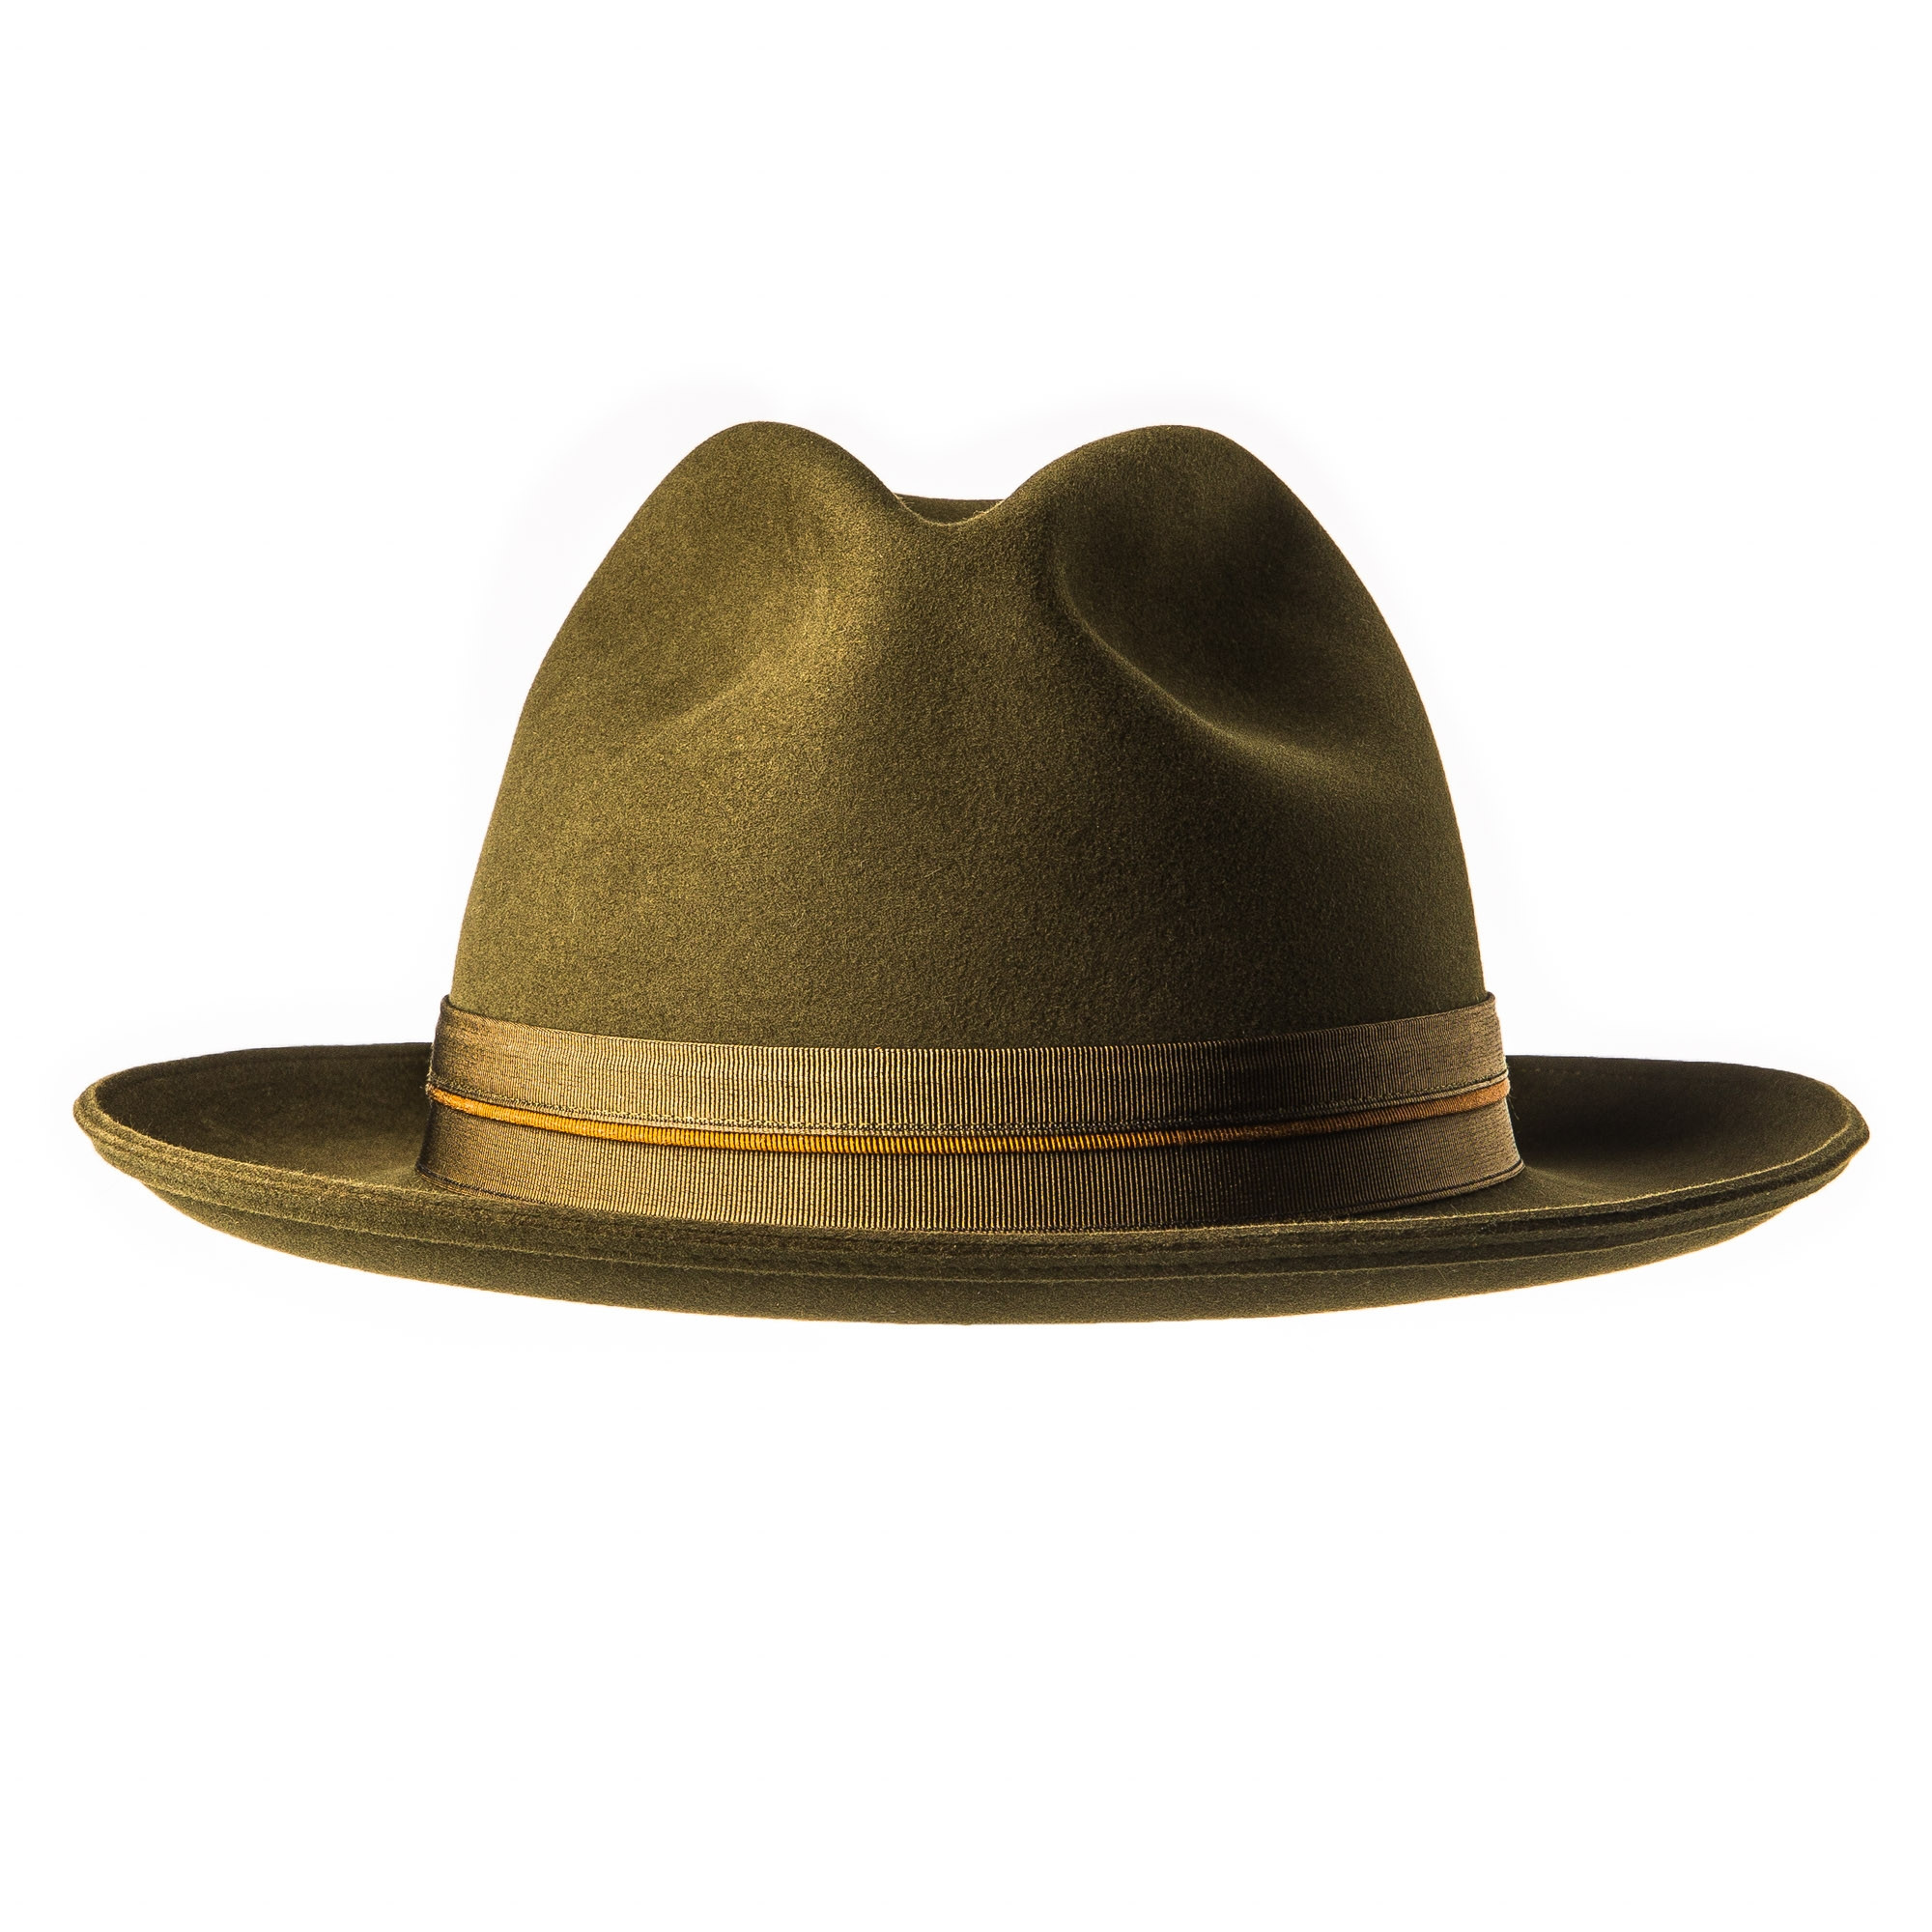 Фасоны шляп мужских. Шляпа вид сверху. Шляпа кабана. Шляпа Федора валяние. Виски шляпа